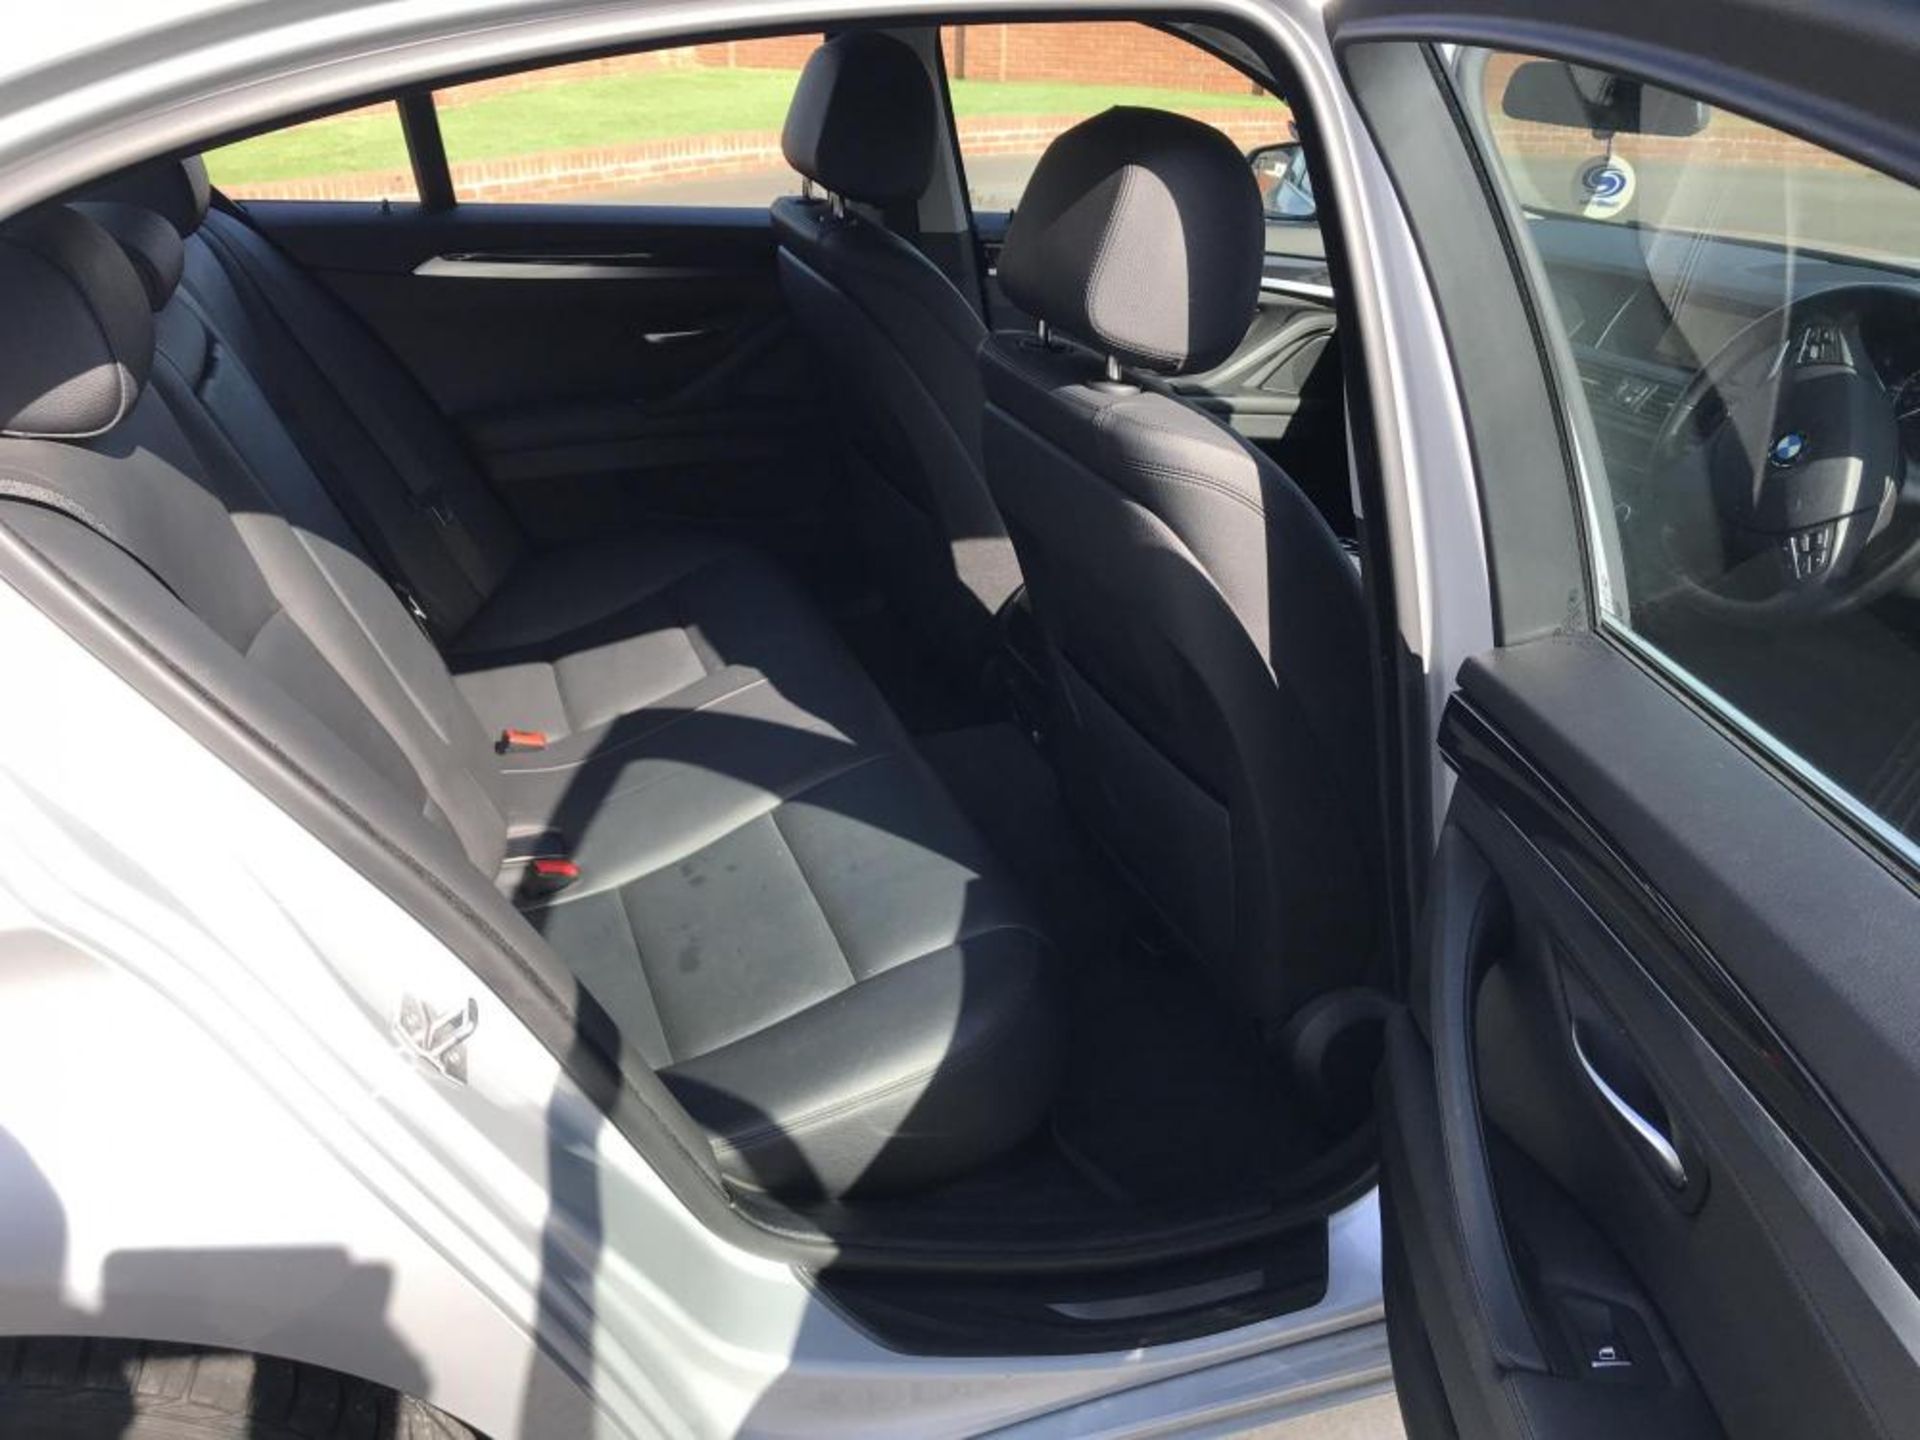 2015/65 REG BMW 520D SE AUTO 2.0 DIESEL 4 DOOR SALOON, SHOWING 0 FORMER KEEPERS *NO VAT* - Image 10 of 19